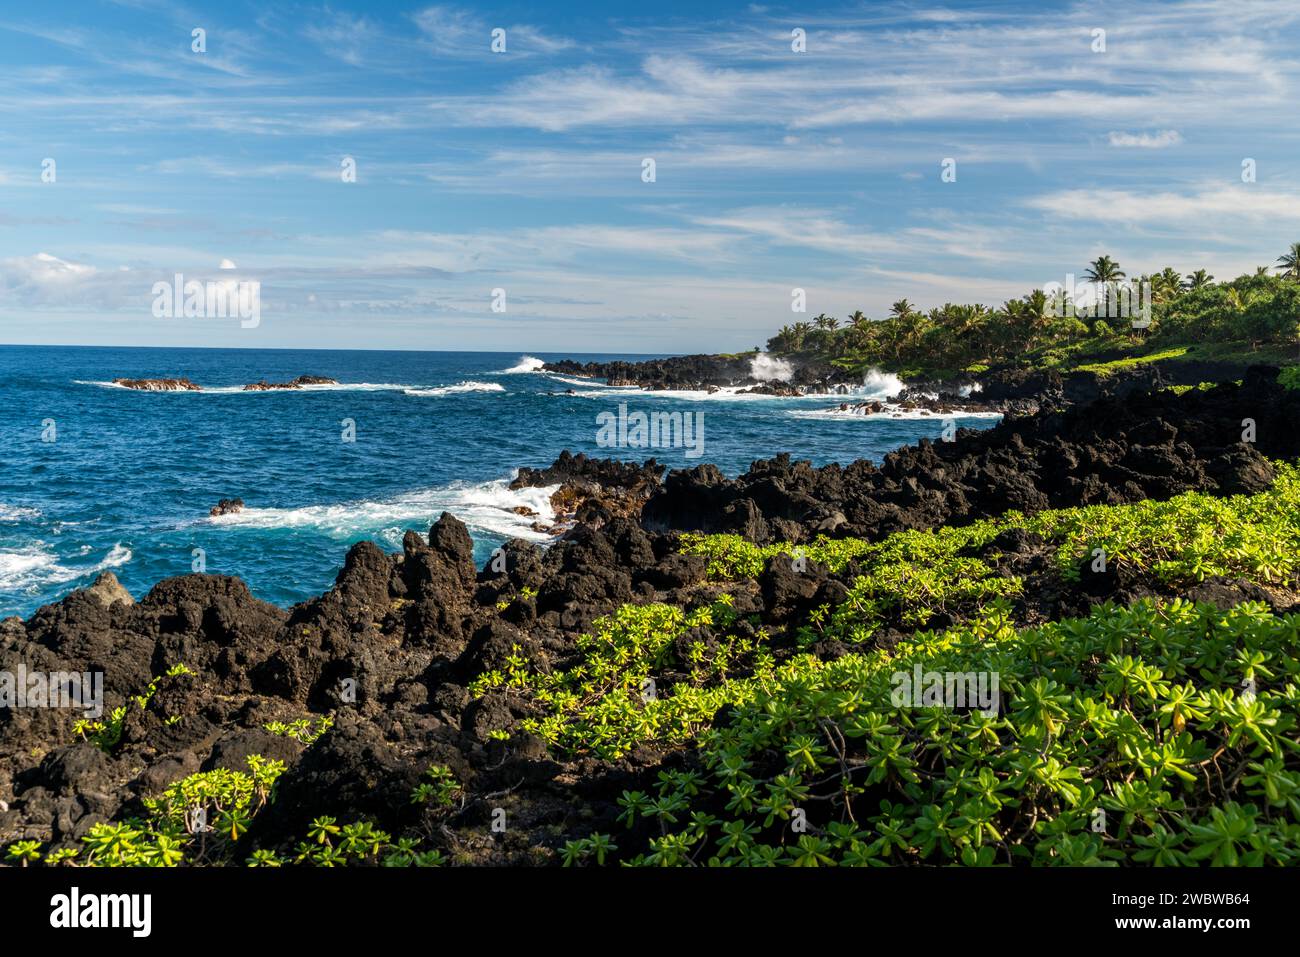 Scenic Maui coastline with lush tropical vegetation and rugged lava rocks against a vibrant blue ocean. Stock Photo